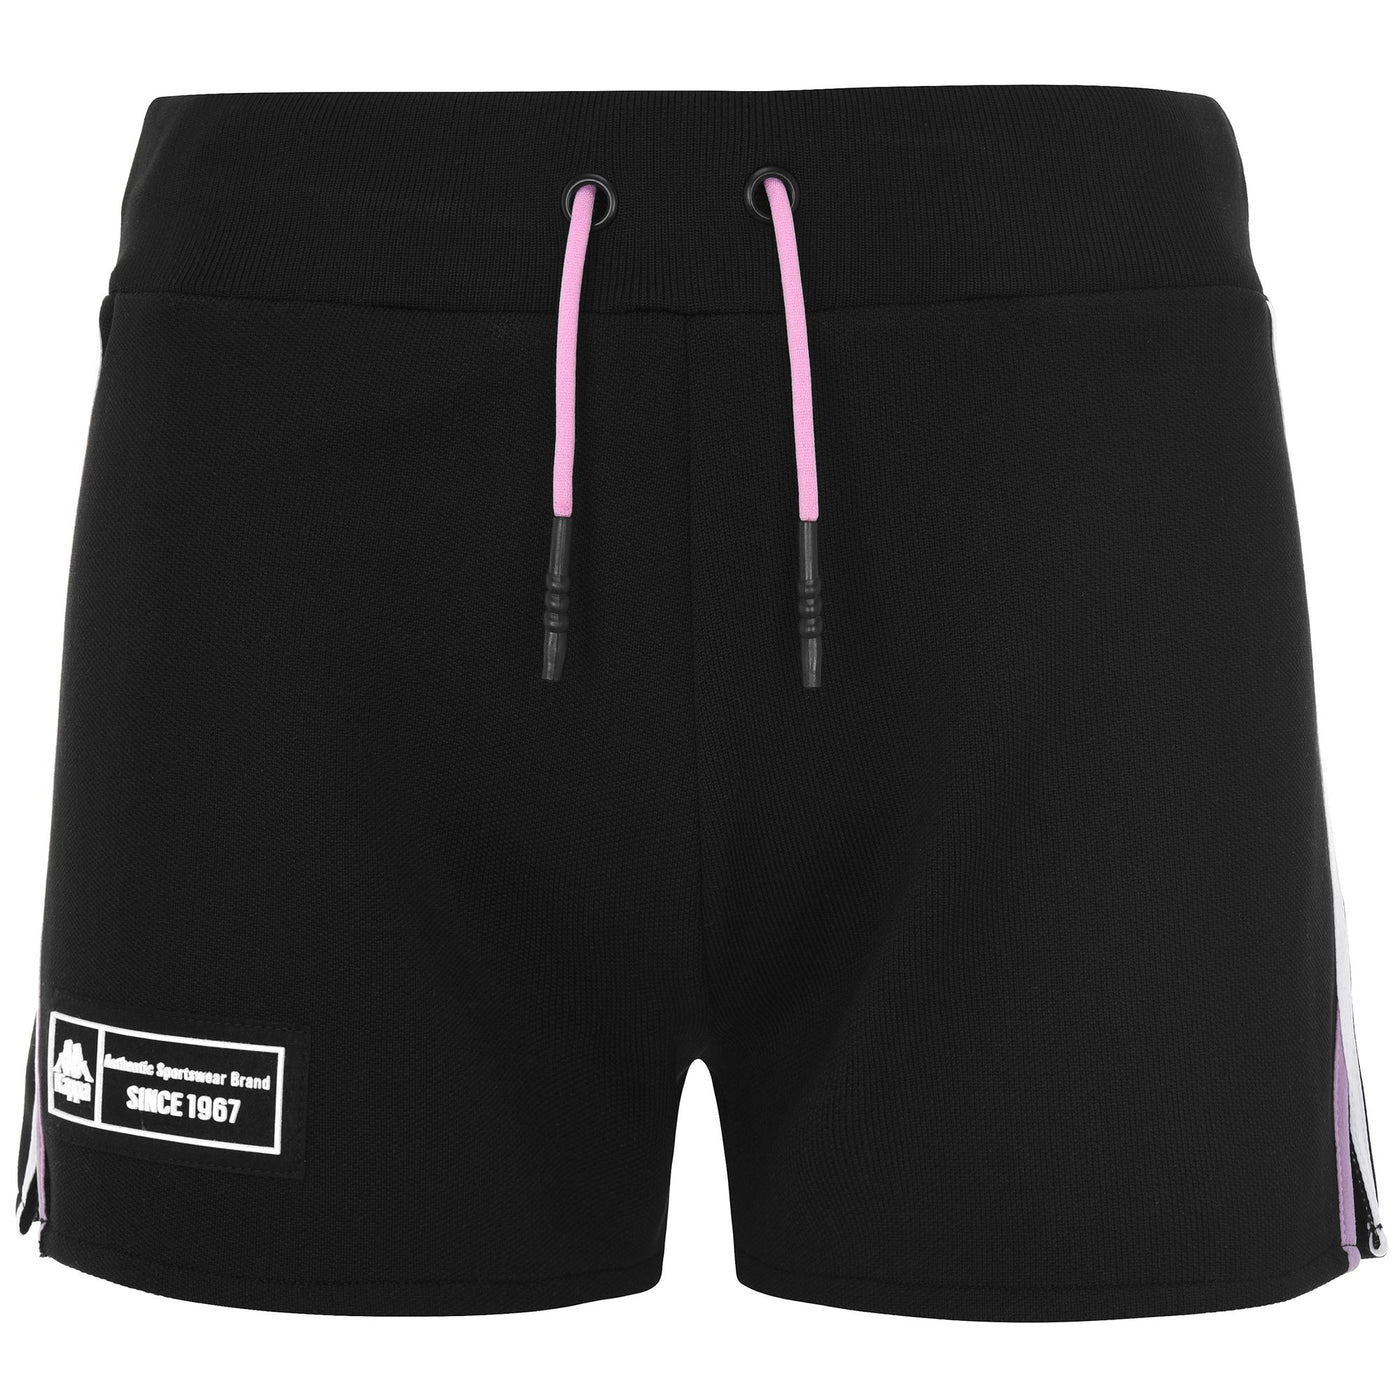 Shorts Woman AUTHENTIC TECH ZAVY Sport  Shorts BLACK - VIOLET LILLA - WHITE Photo (jpg Rgb)			